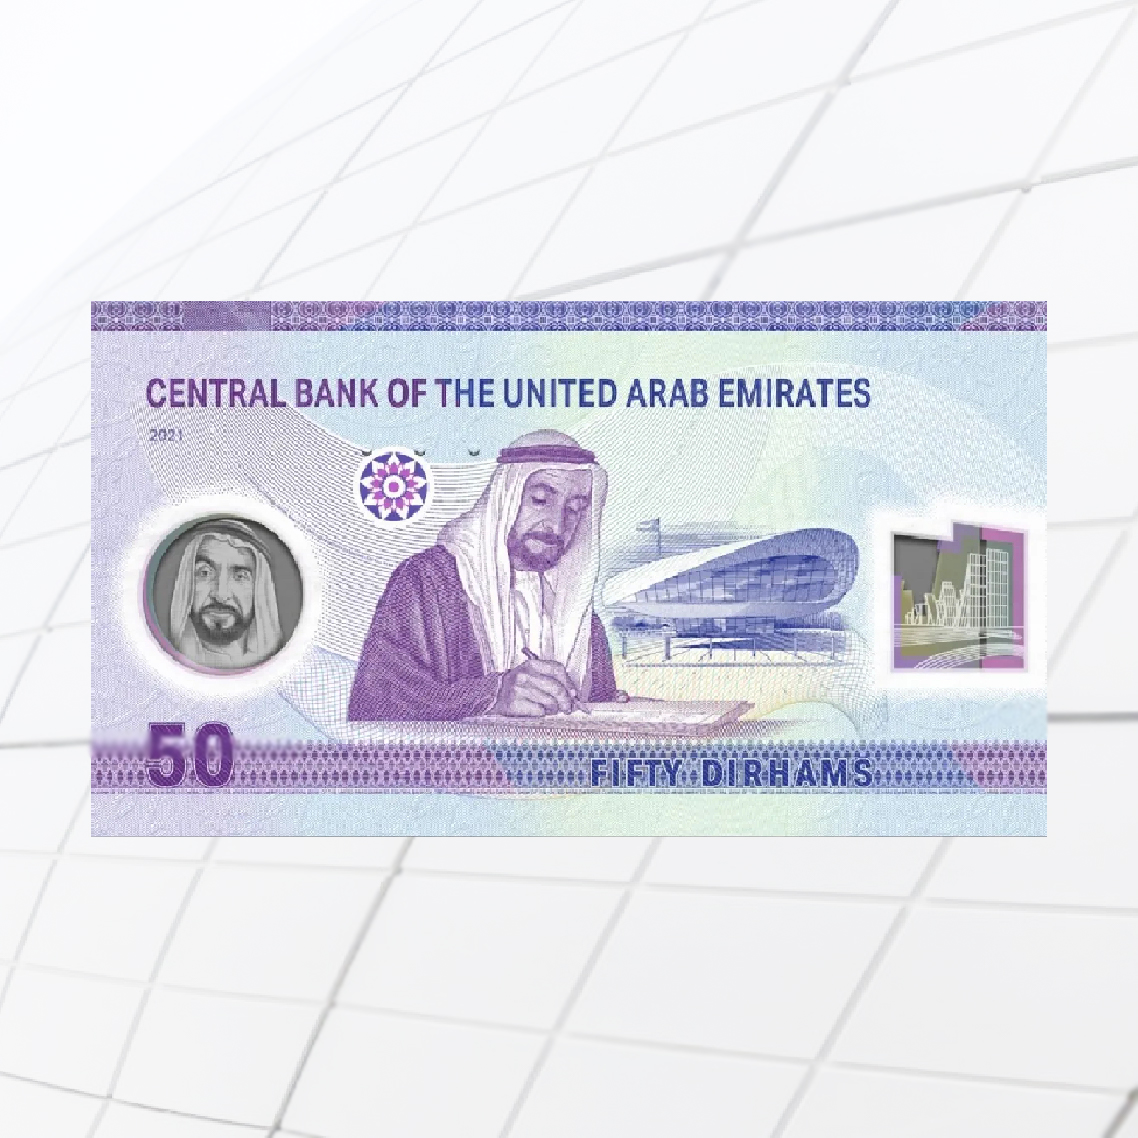 Etihad Museum Featured on UAE Currency